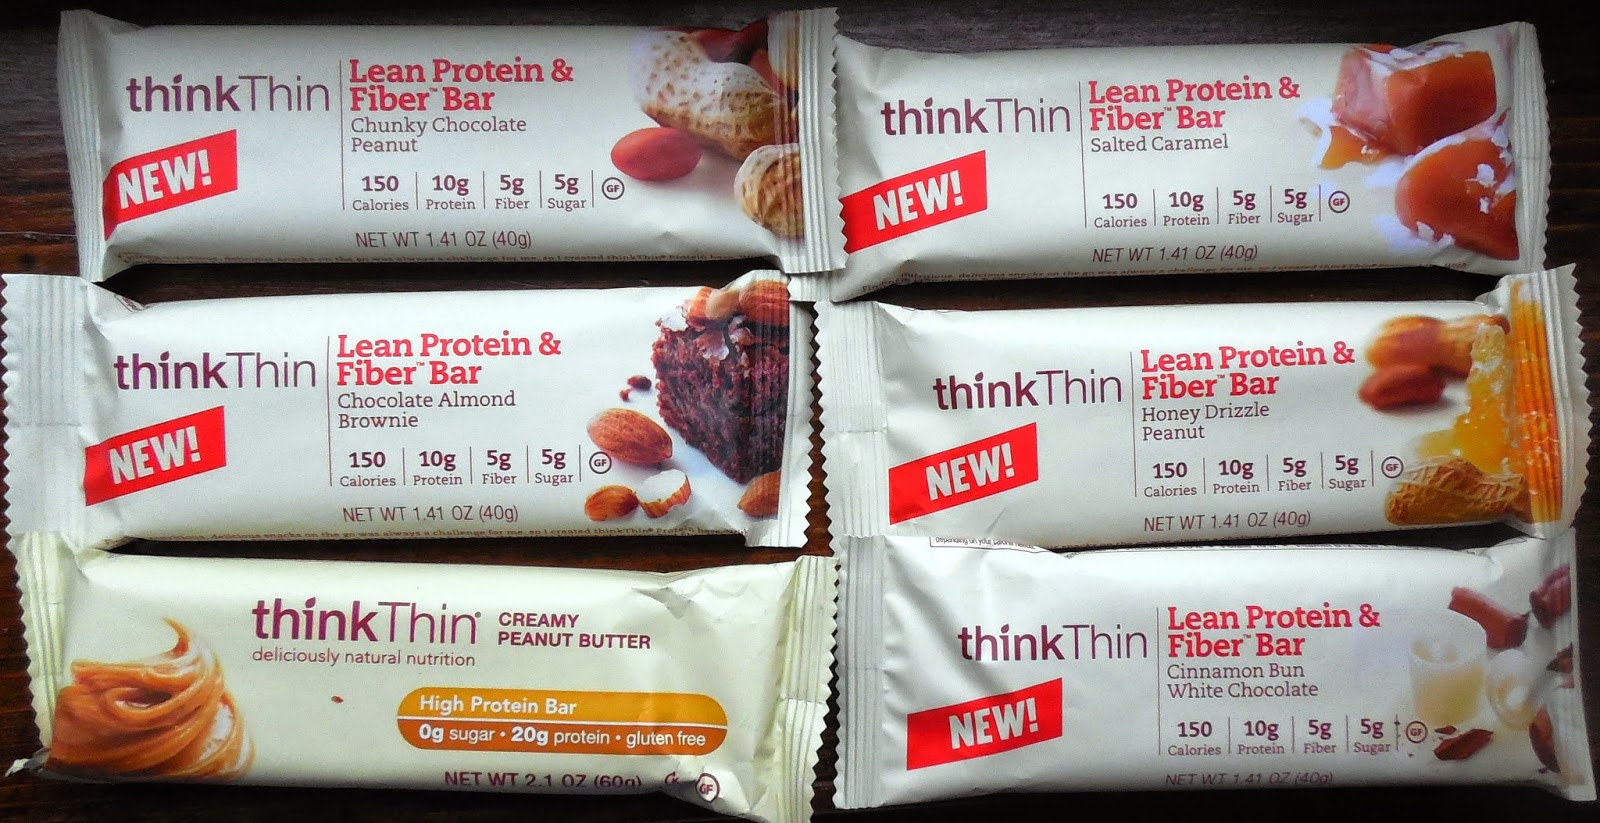 thinkThin Lean Protein & Fiber Bar